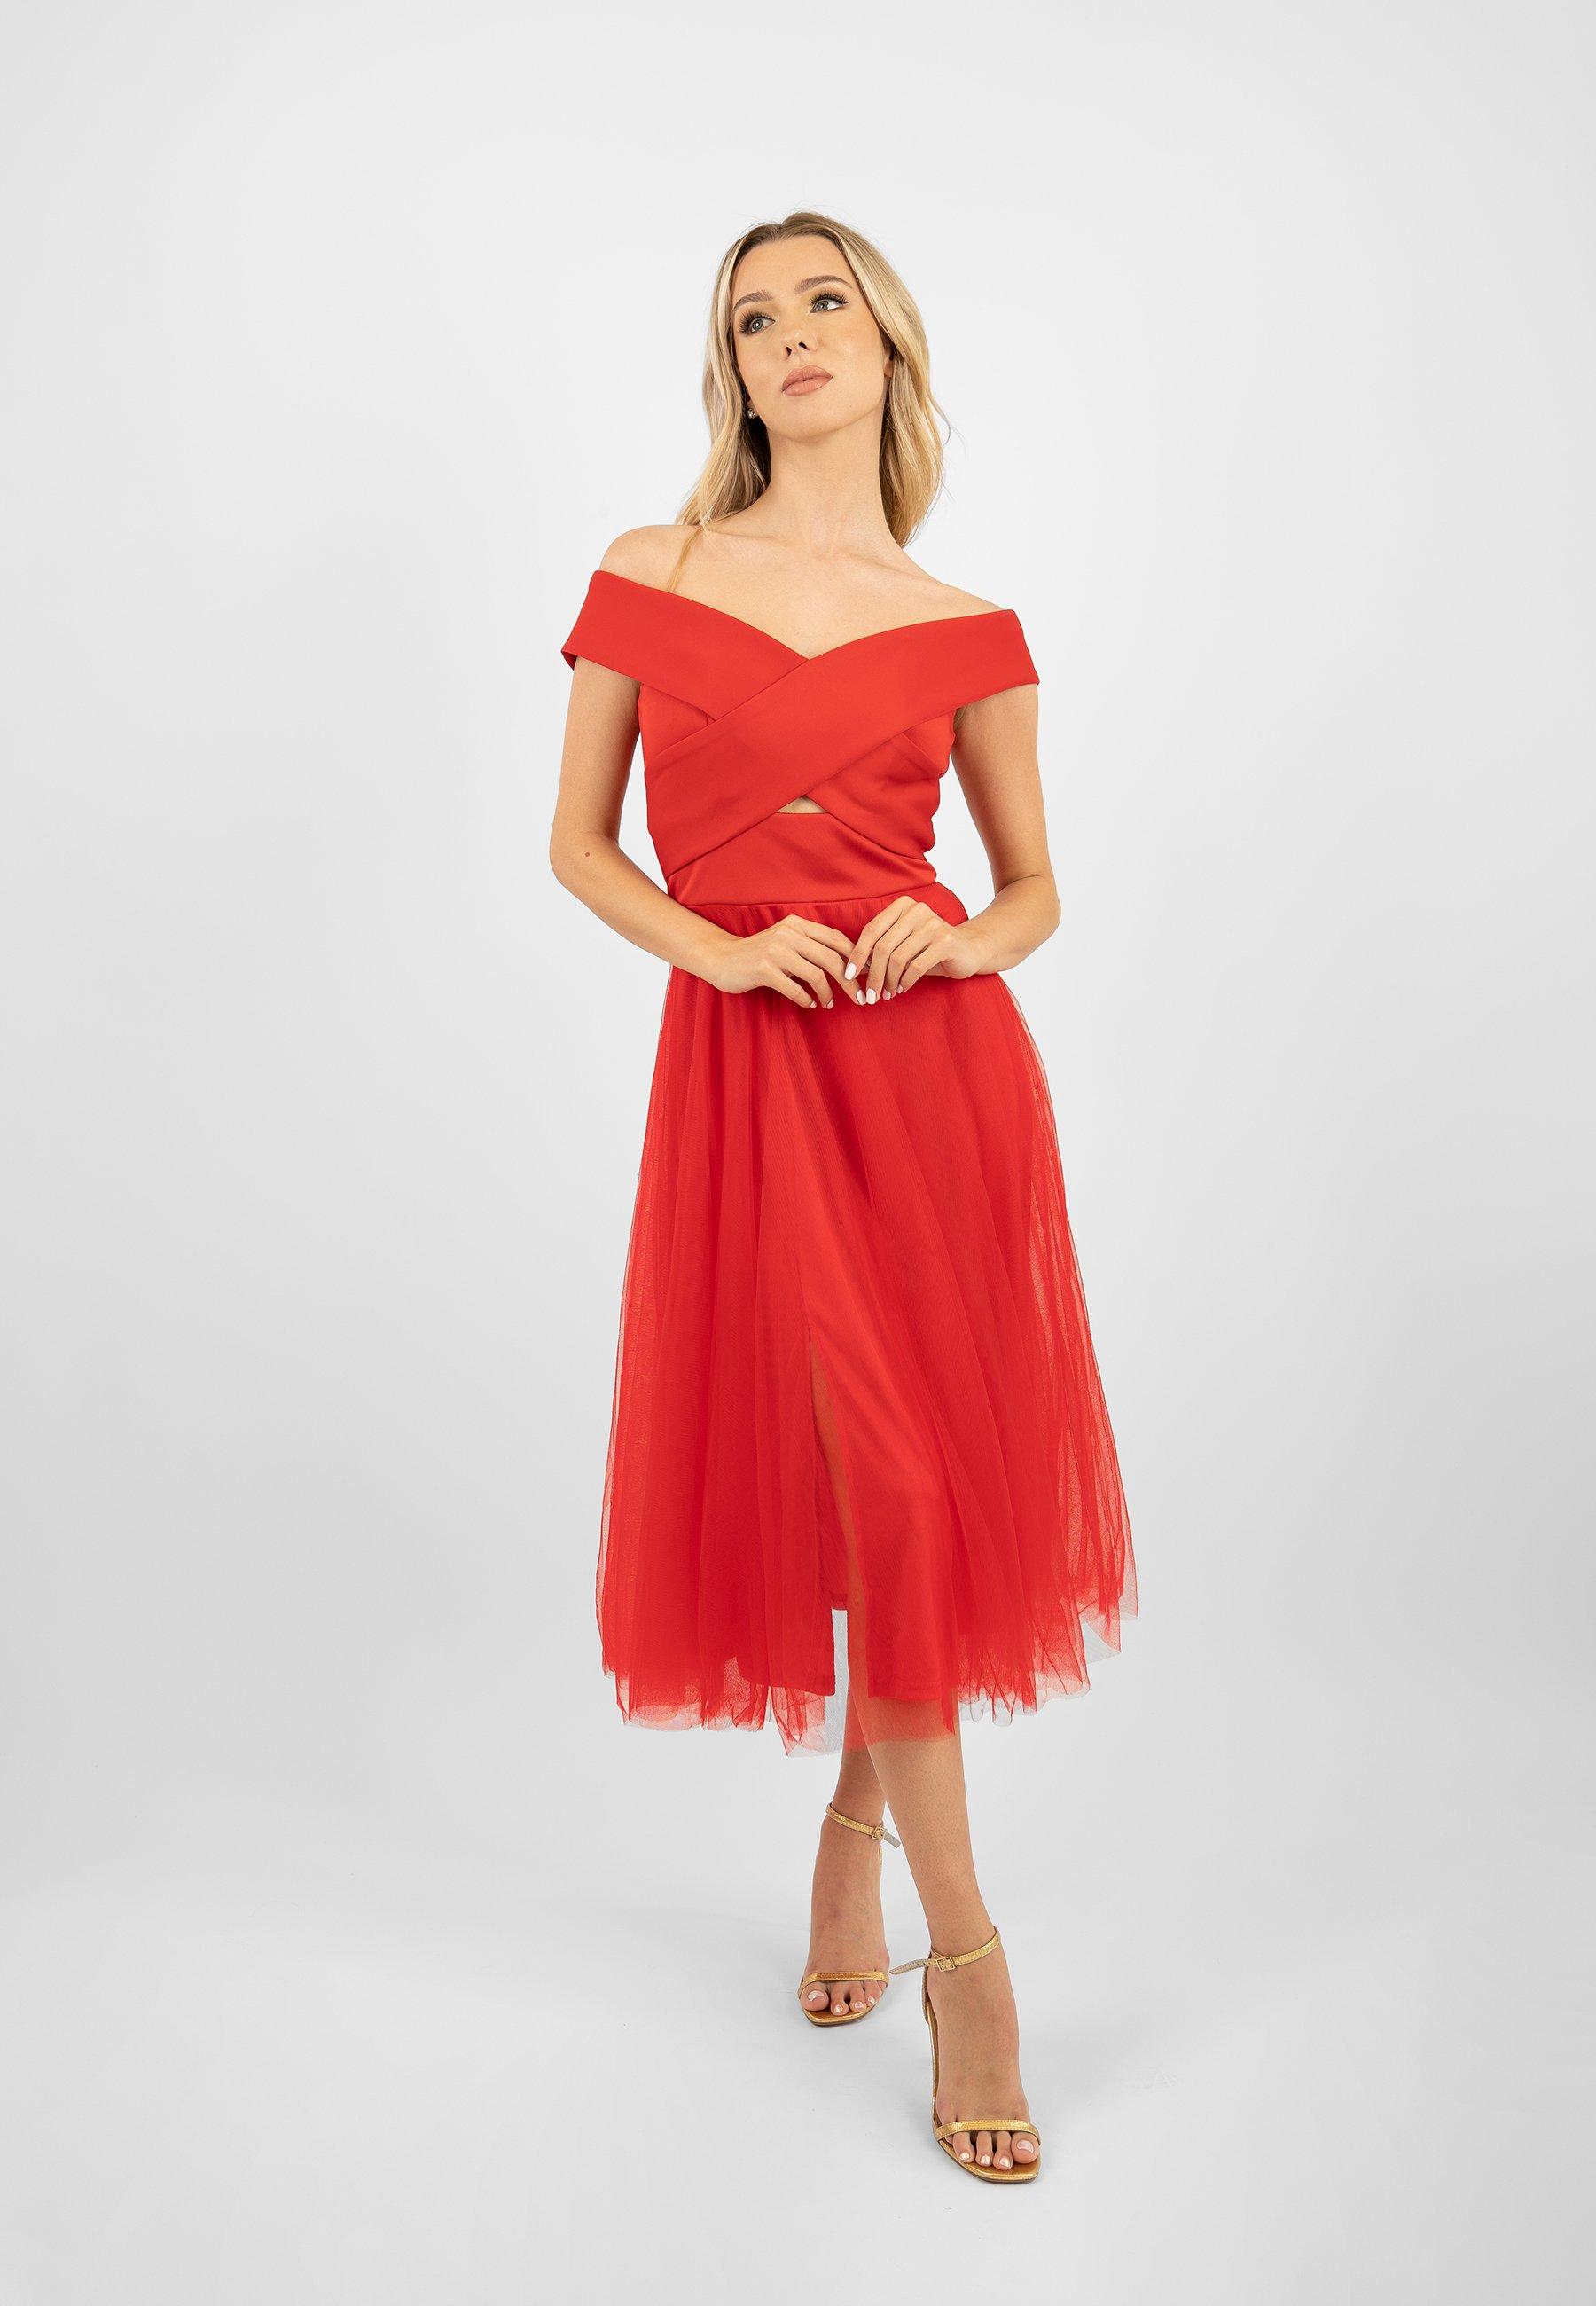 Красное платье-миди из тюля с разрезом Skirt and Stiletto, красный платье бардо bardot бежевый